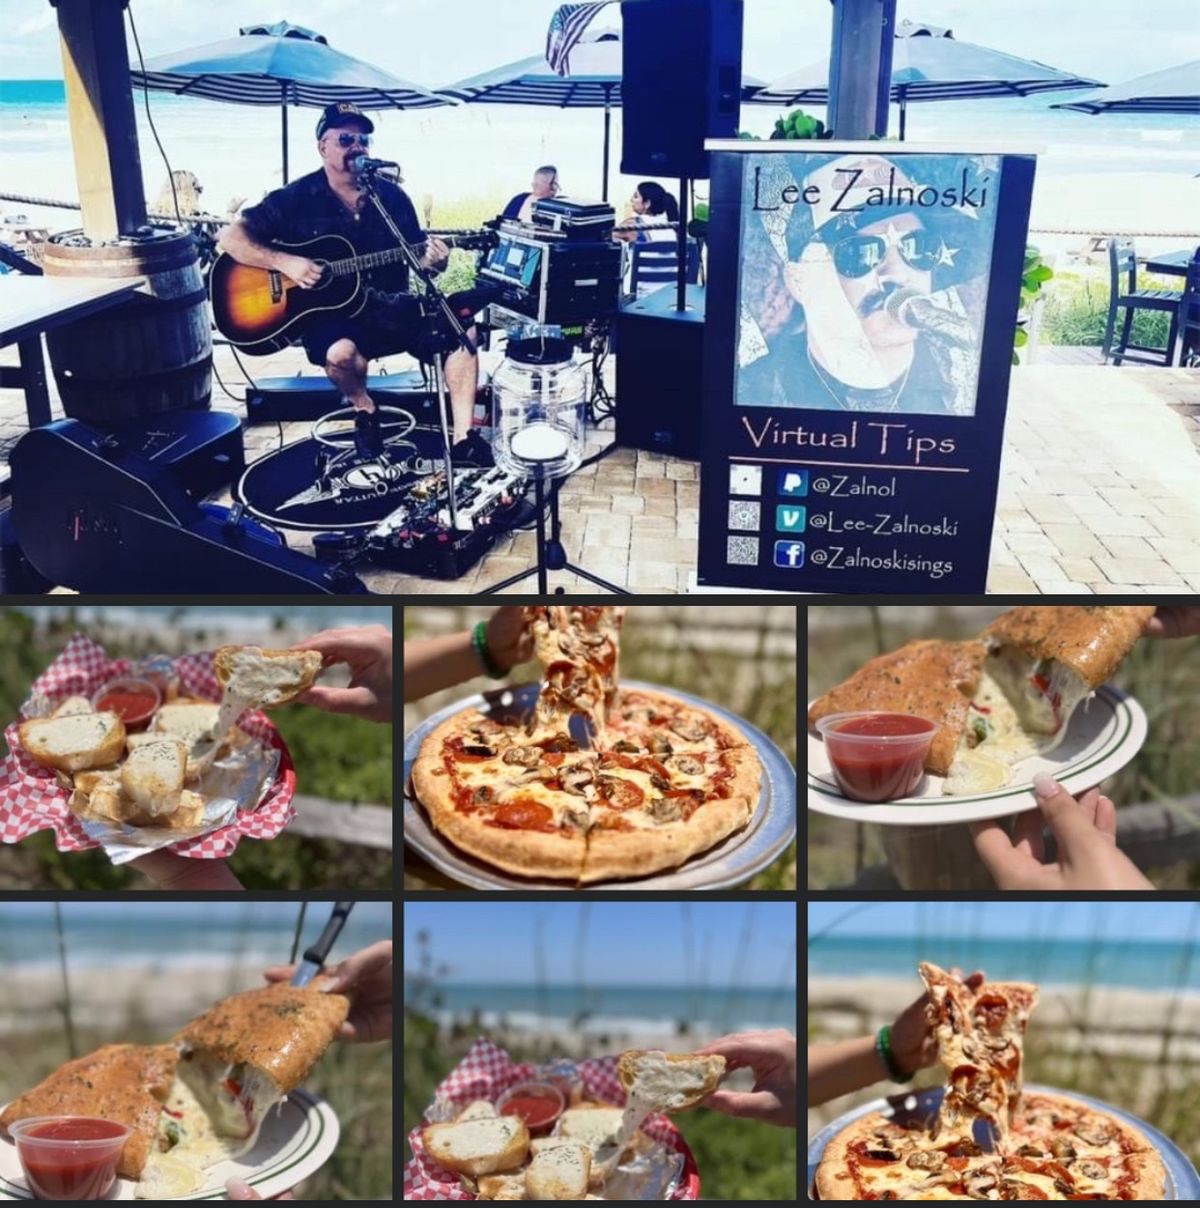 Lee Zalnoski live @ Pappagallos Pizza\/ Morning Glory Eatery Satellite Beach July 6th 5-9pm